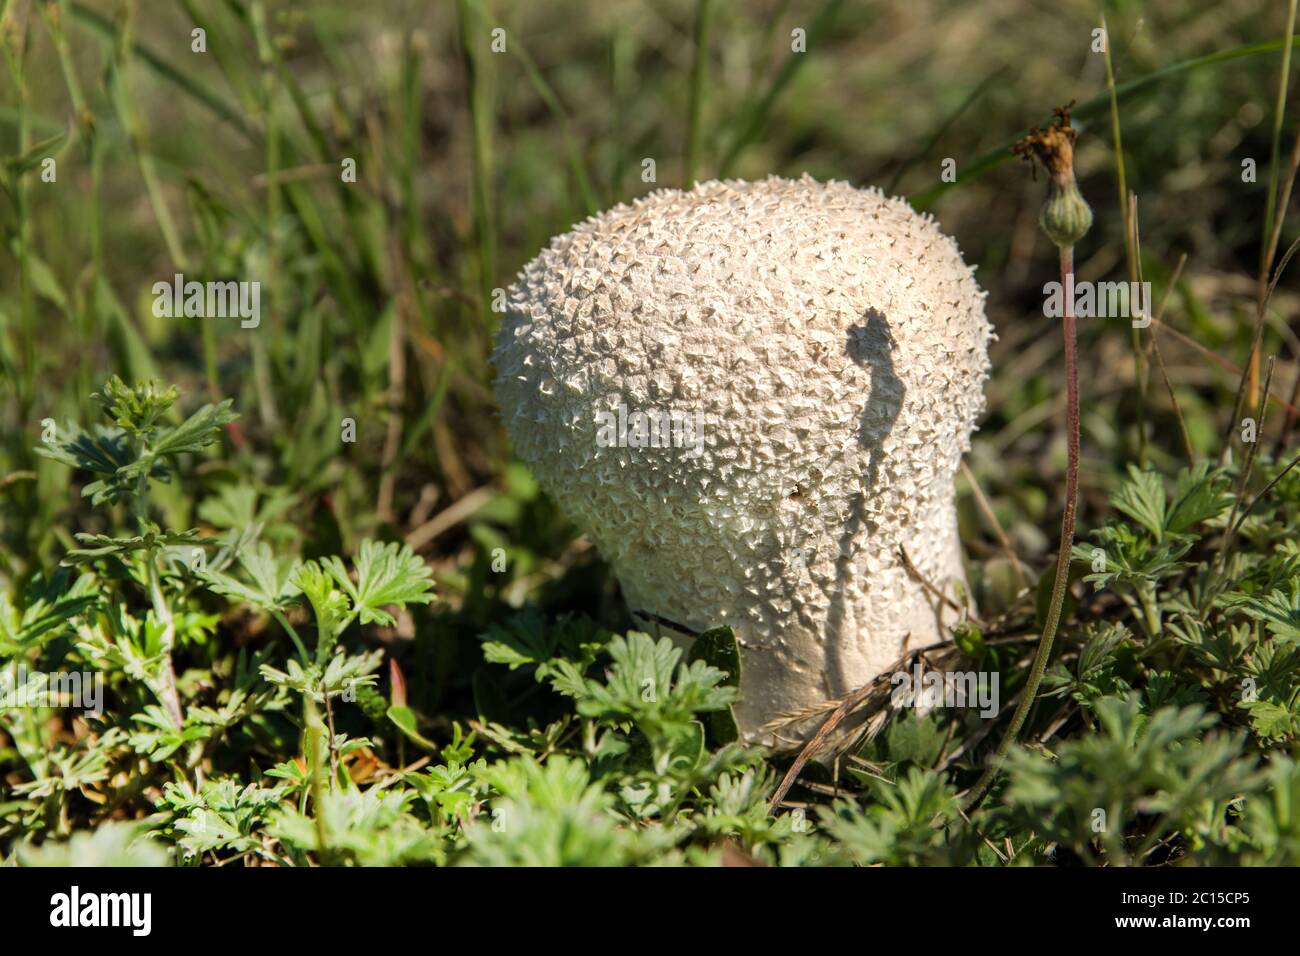 Common puffball mushroom - Lycoperdon perlatum - growing in green grass moss close up. Edible mushroom. Stock Photo